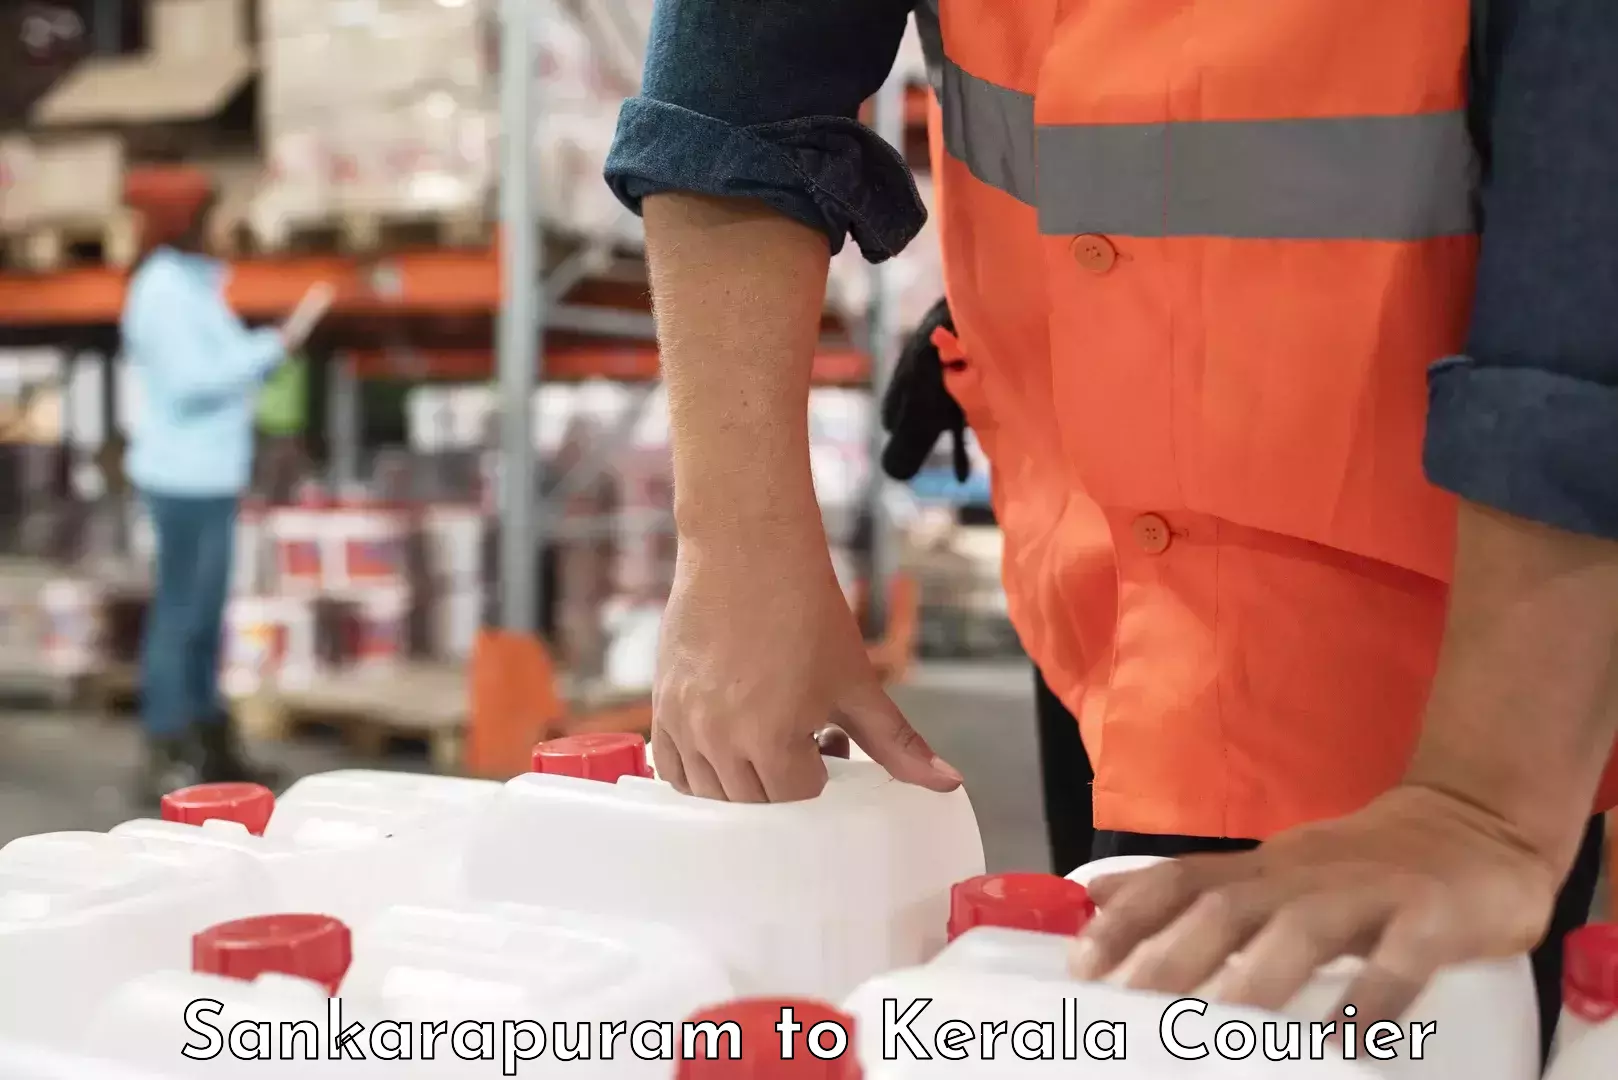 Luggage transport company Sankarapuram to Kerala